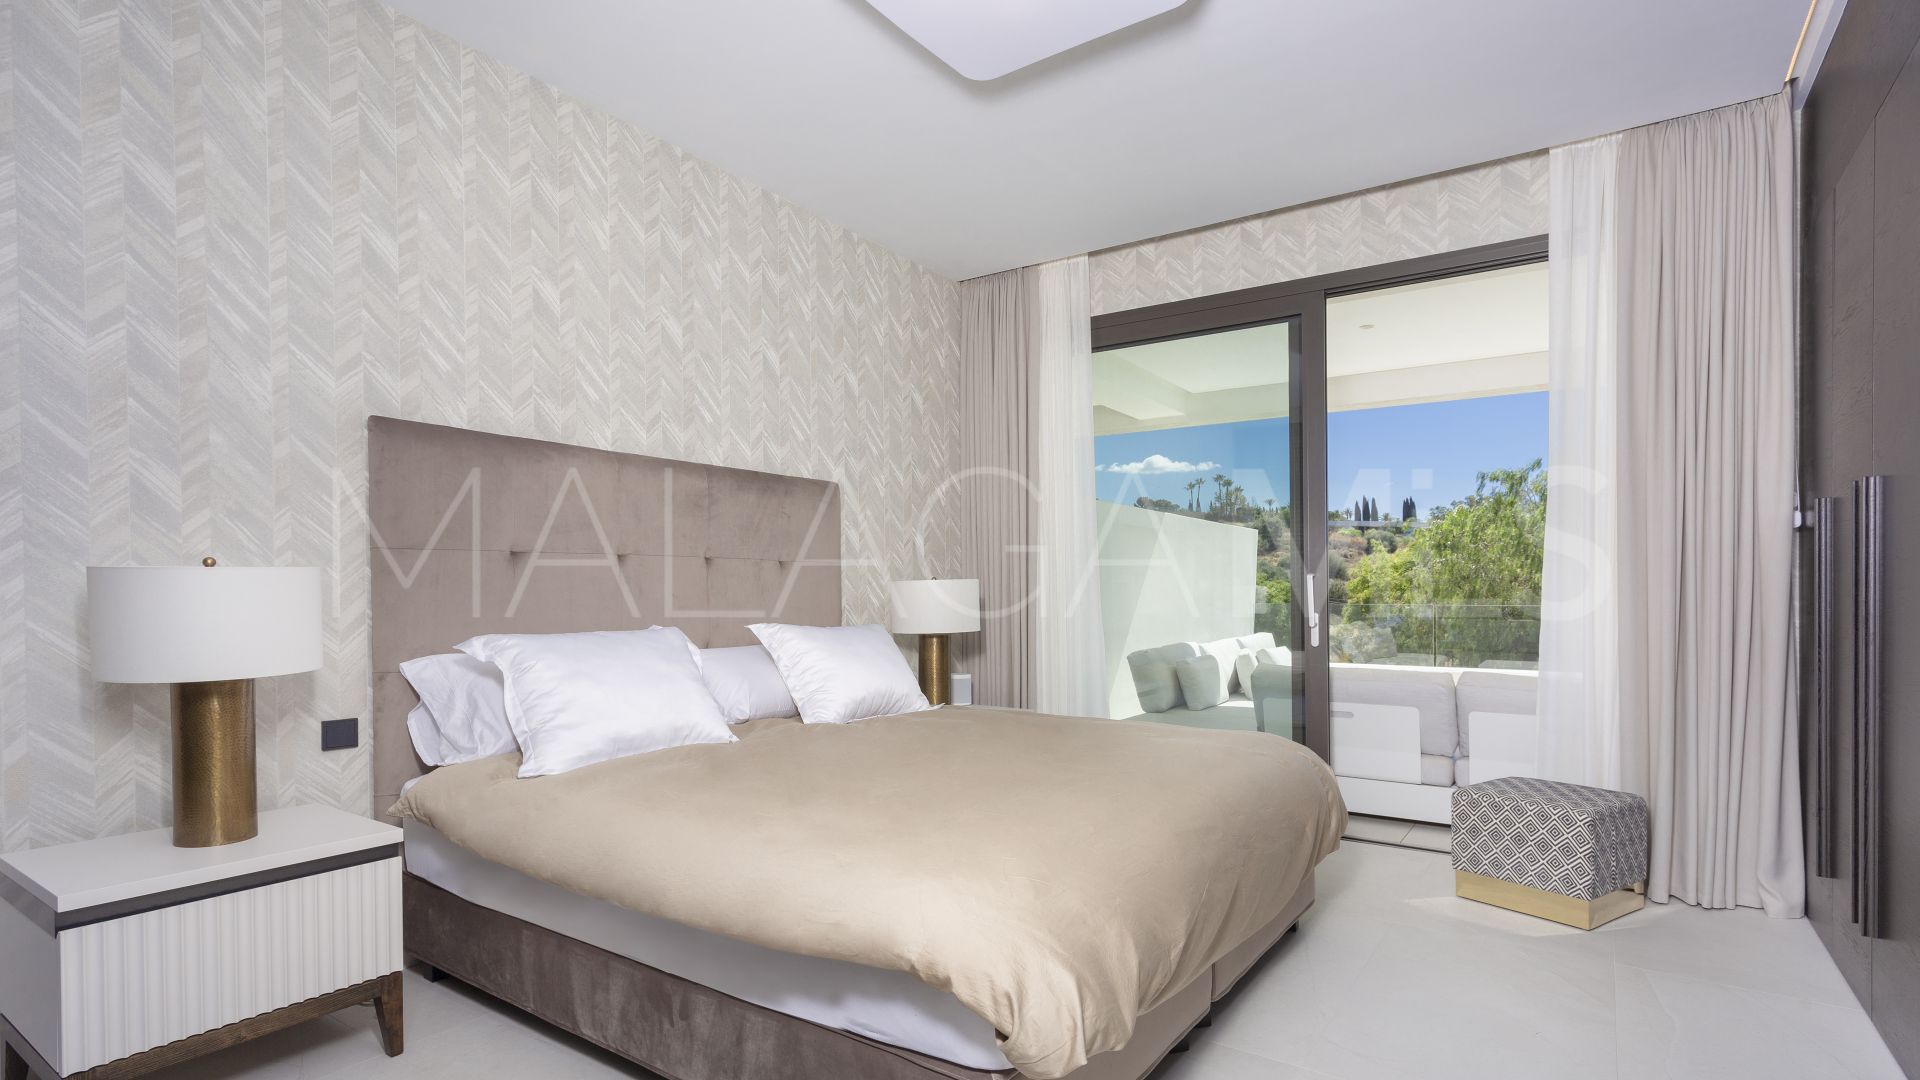 For sale Epic Marbella 4 bedrooms duplex penthouse